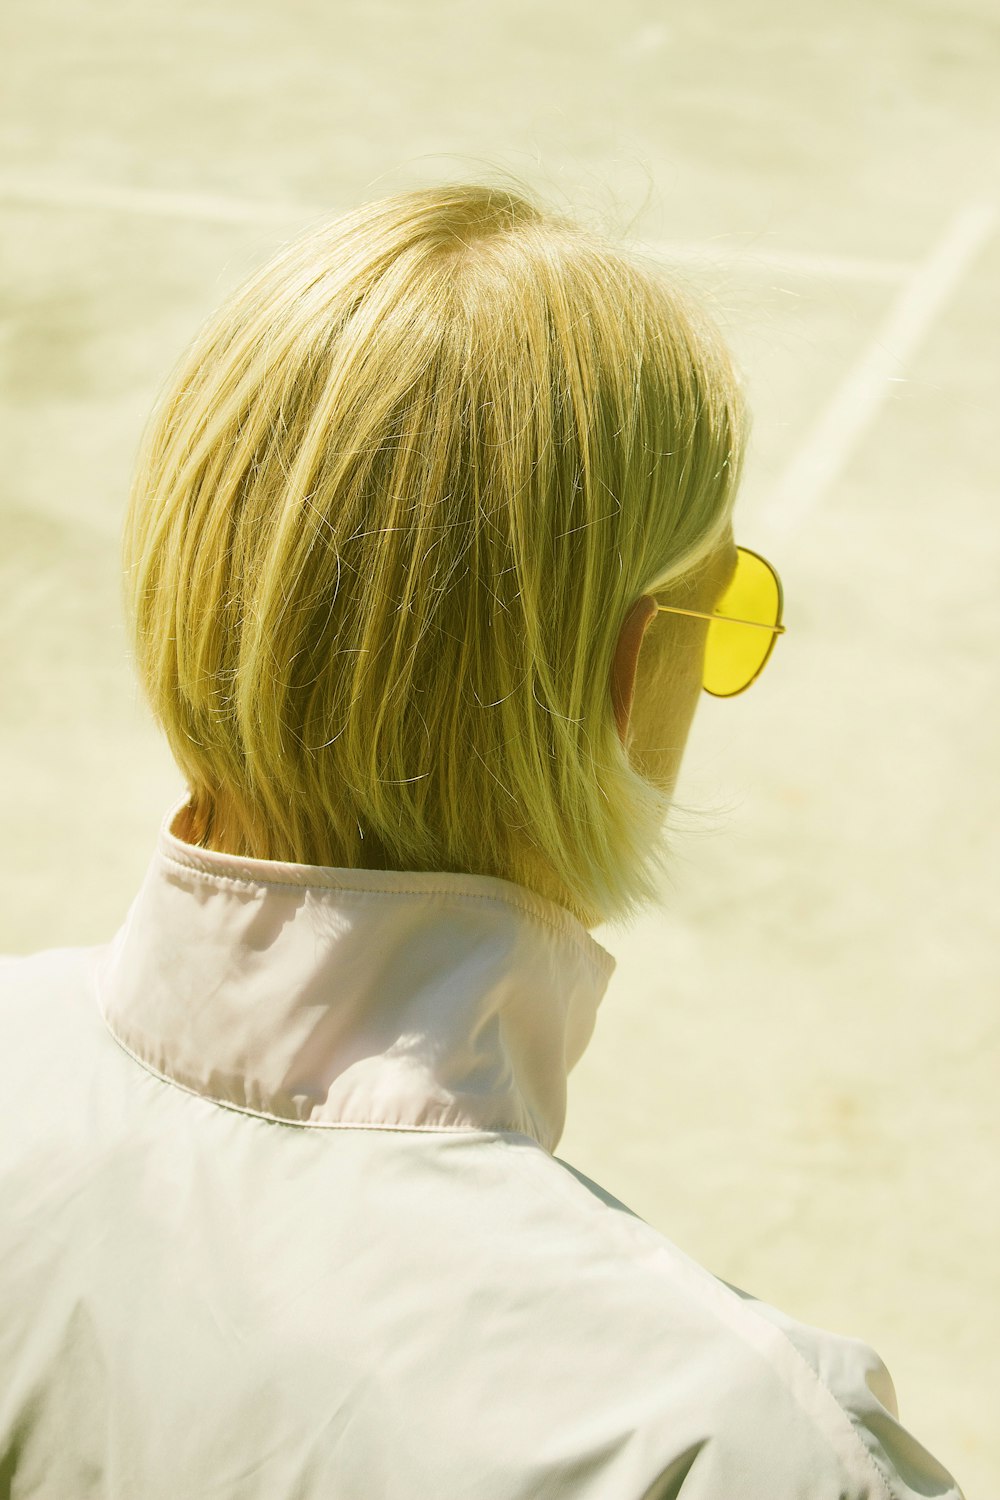 person wearing yellow sunglasses